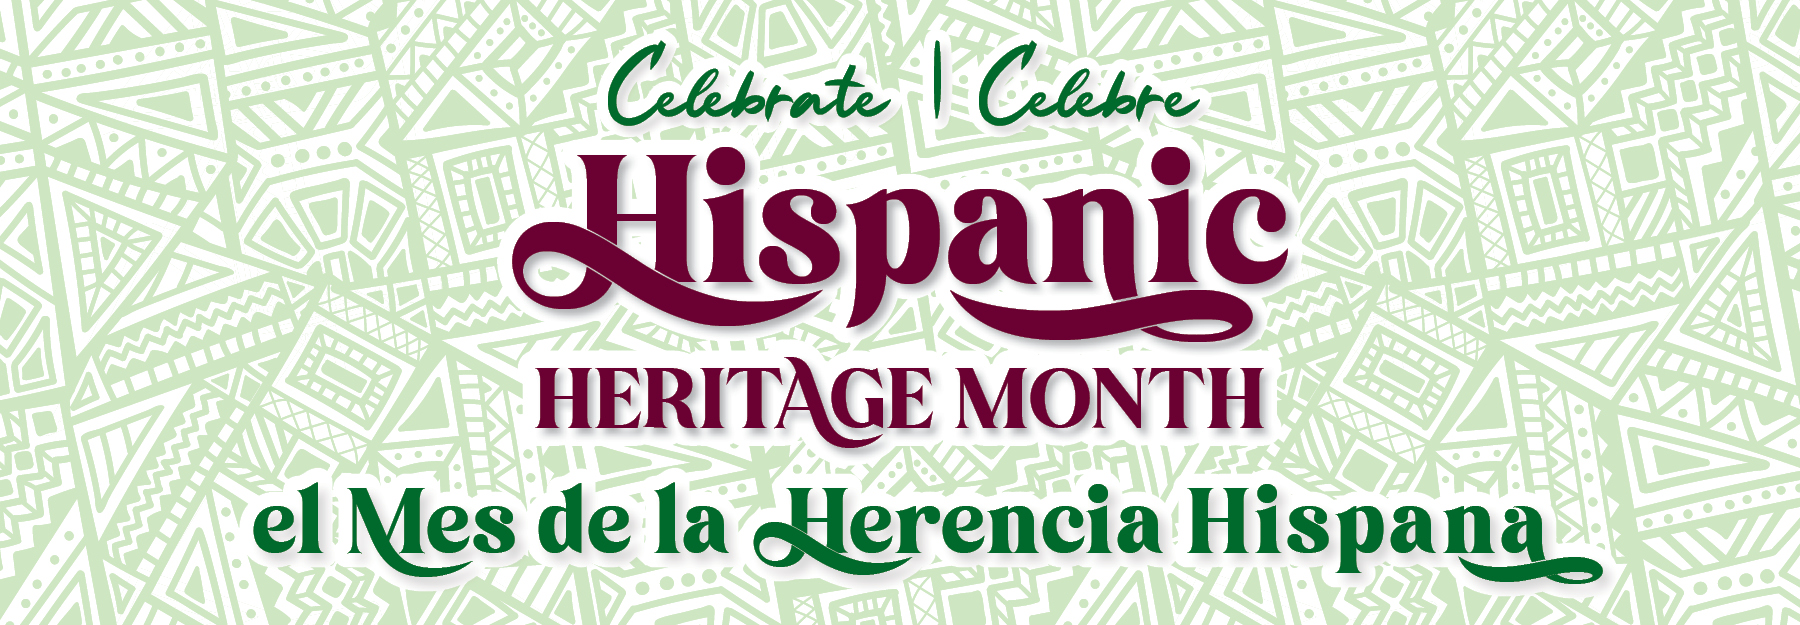 Text that says Celebrate Hispanic Heritage Month/Celebre el Mes de la Herencia Hispana on a patterned background